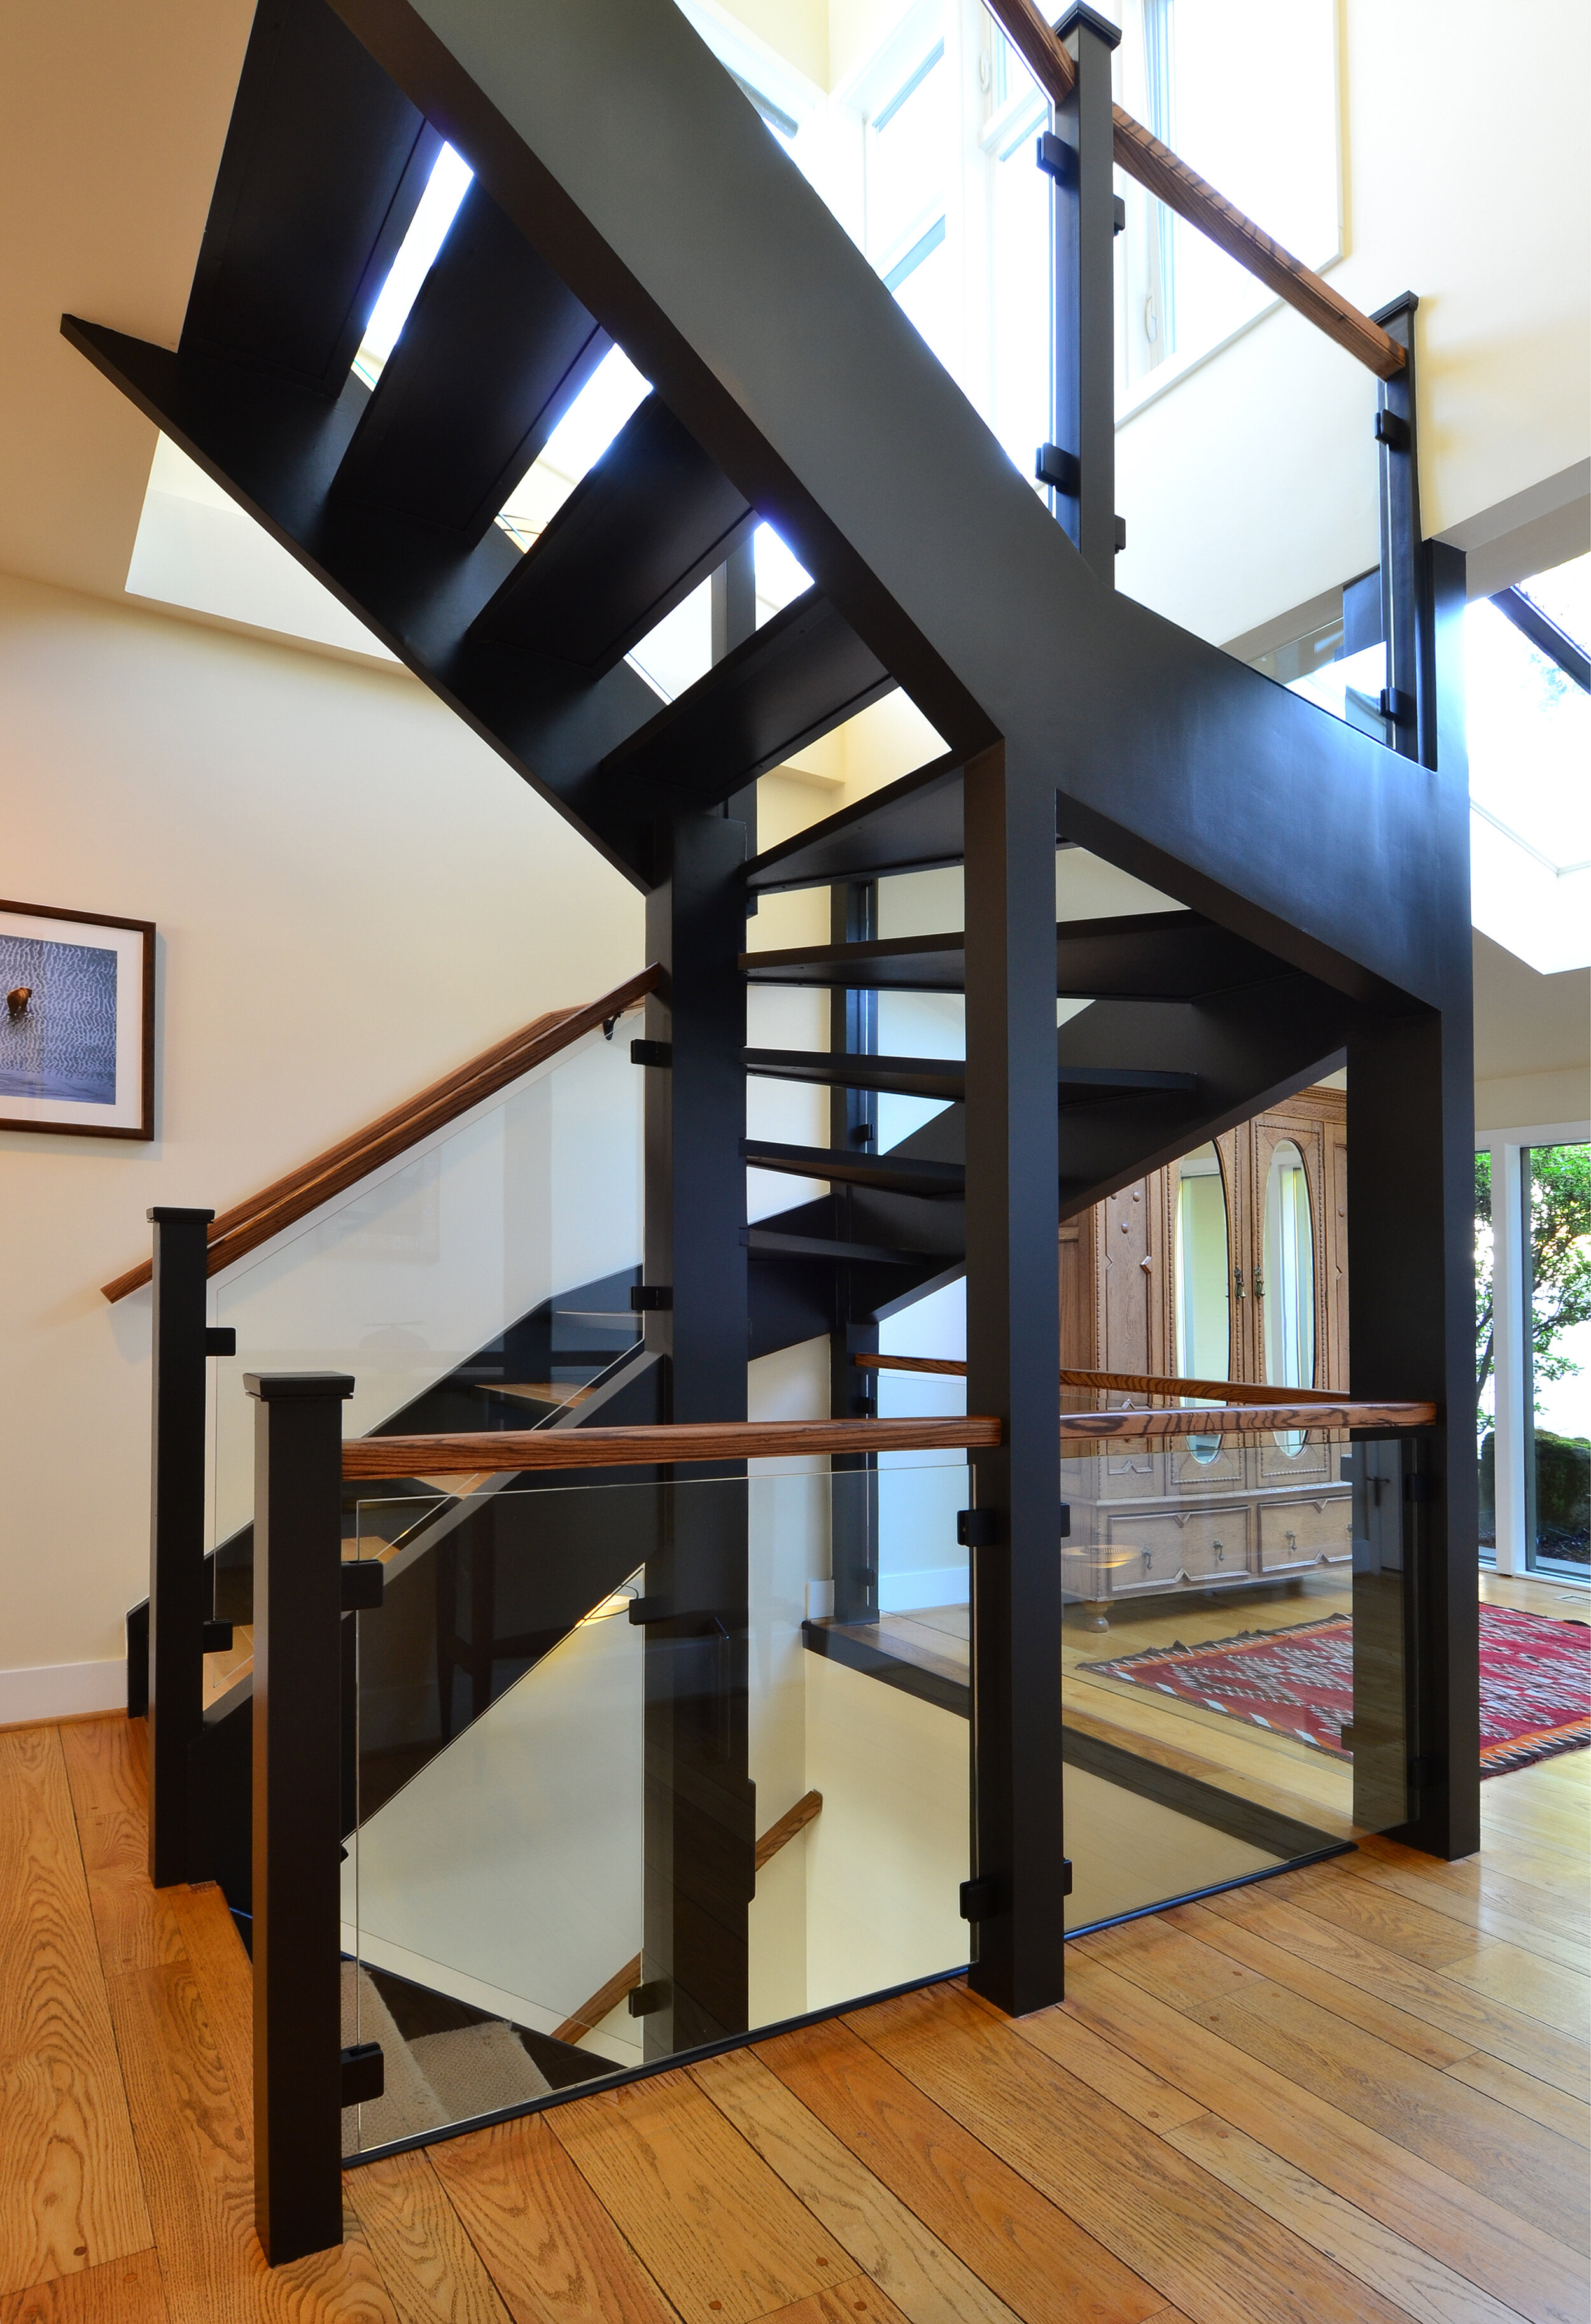 4 - Interior Carpentry Projects - Stairs - Portfolio.jpg